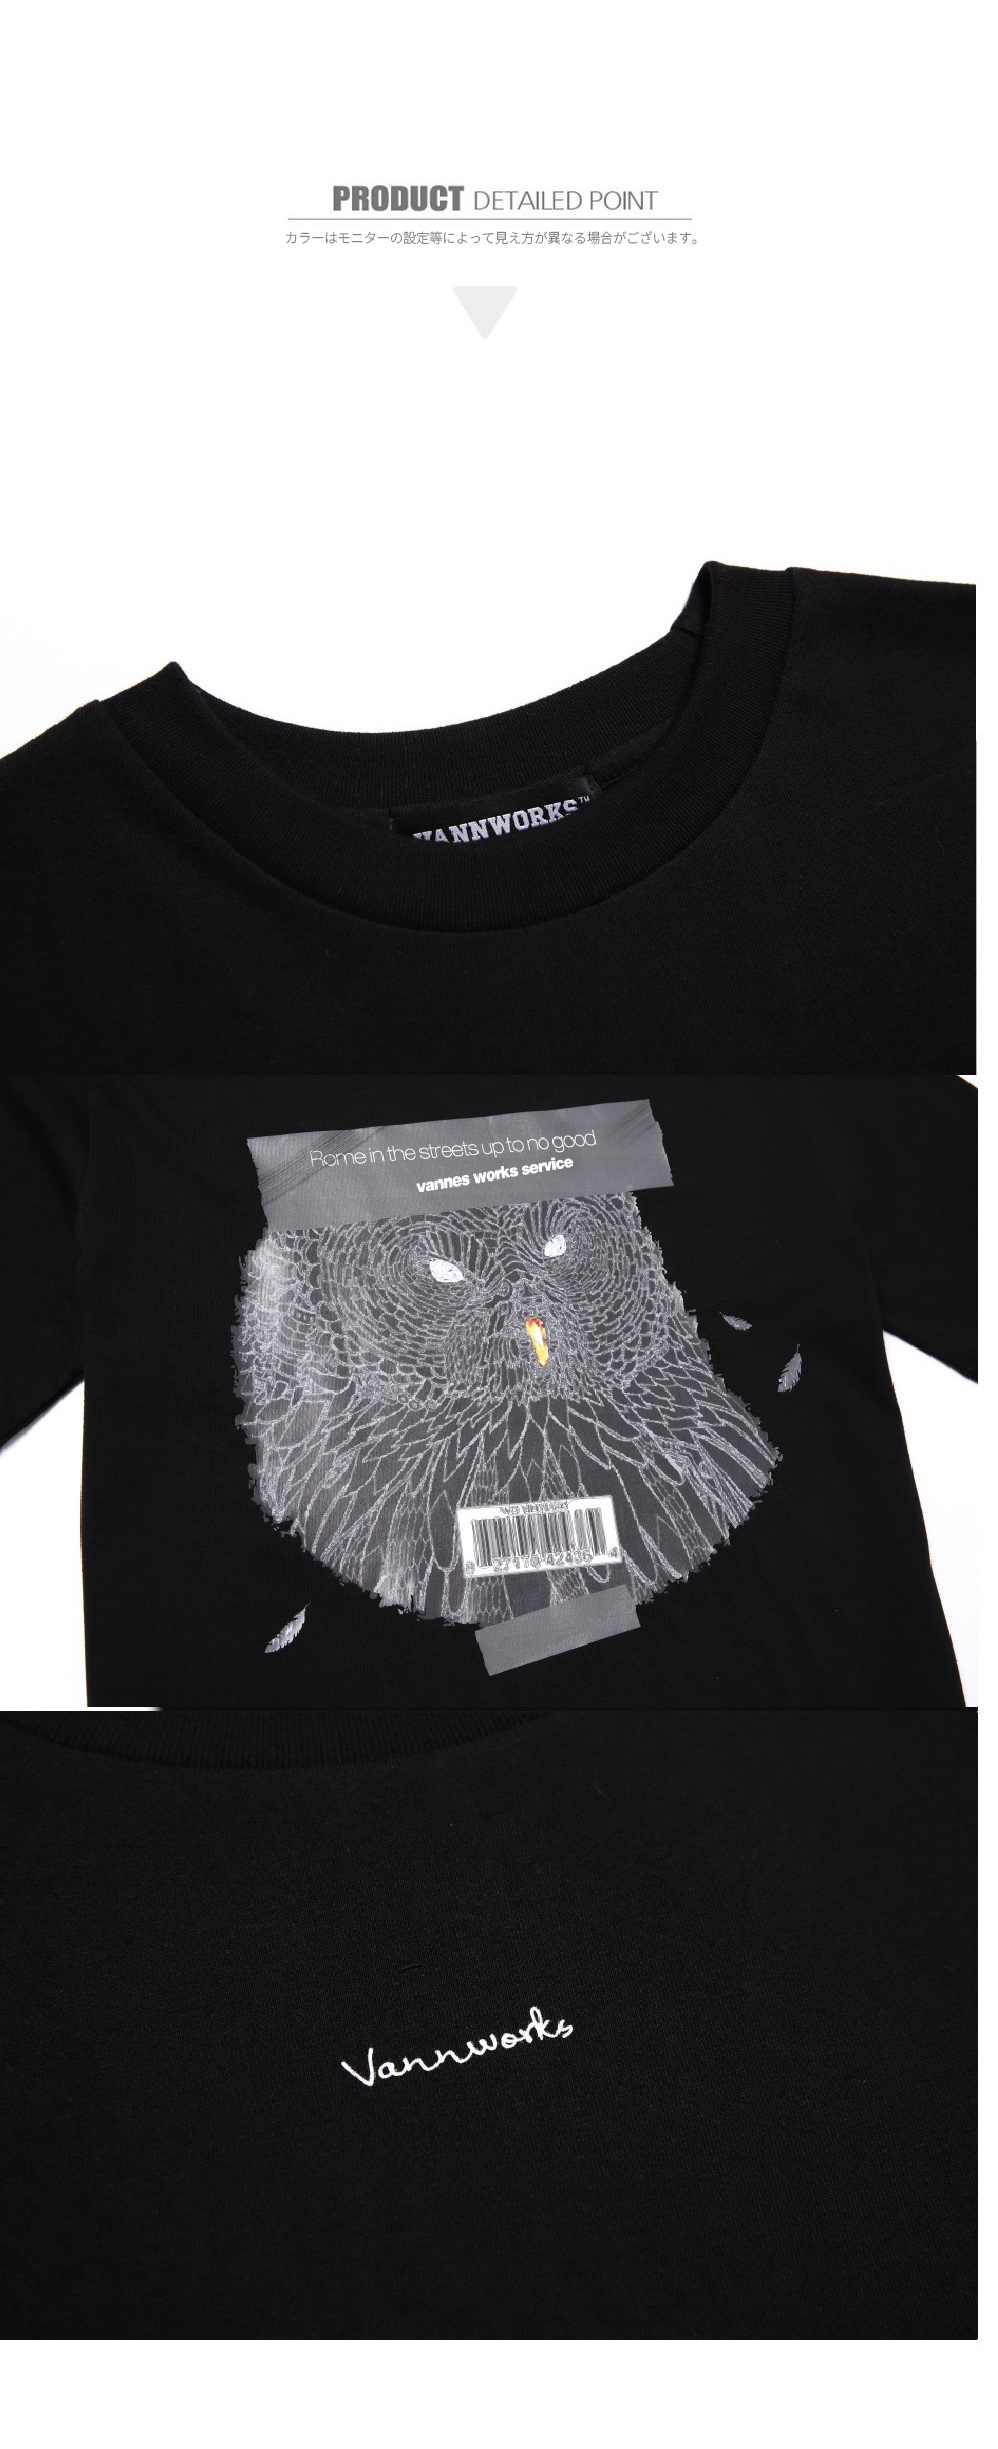 *VANNWORKS*OWL Tシャツ(VNAHTS111)ブラック | 詳細画像5